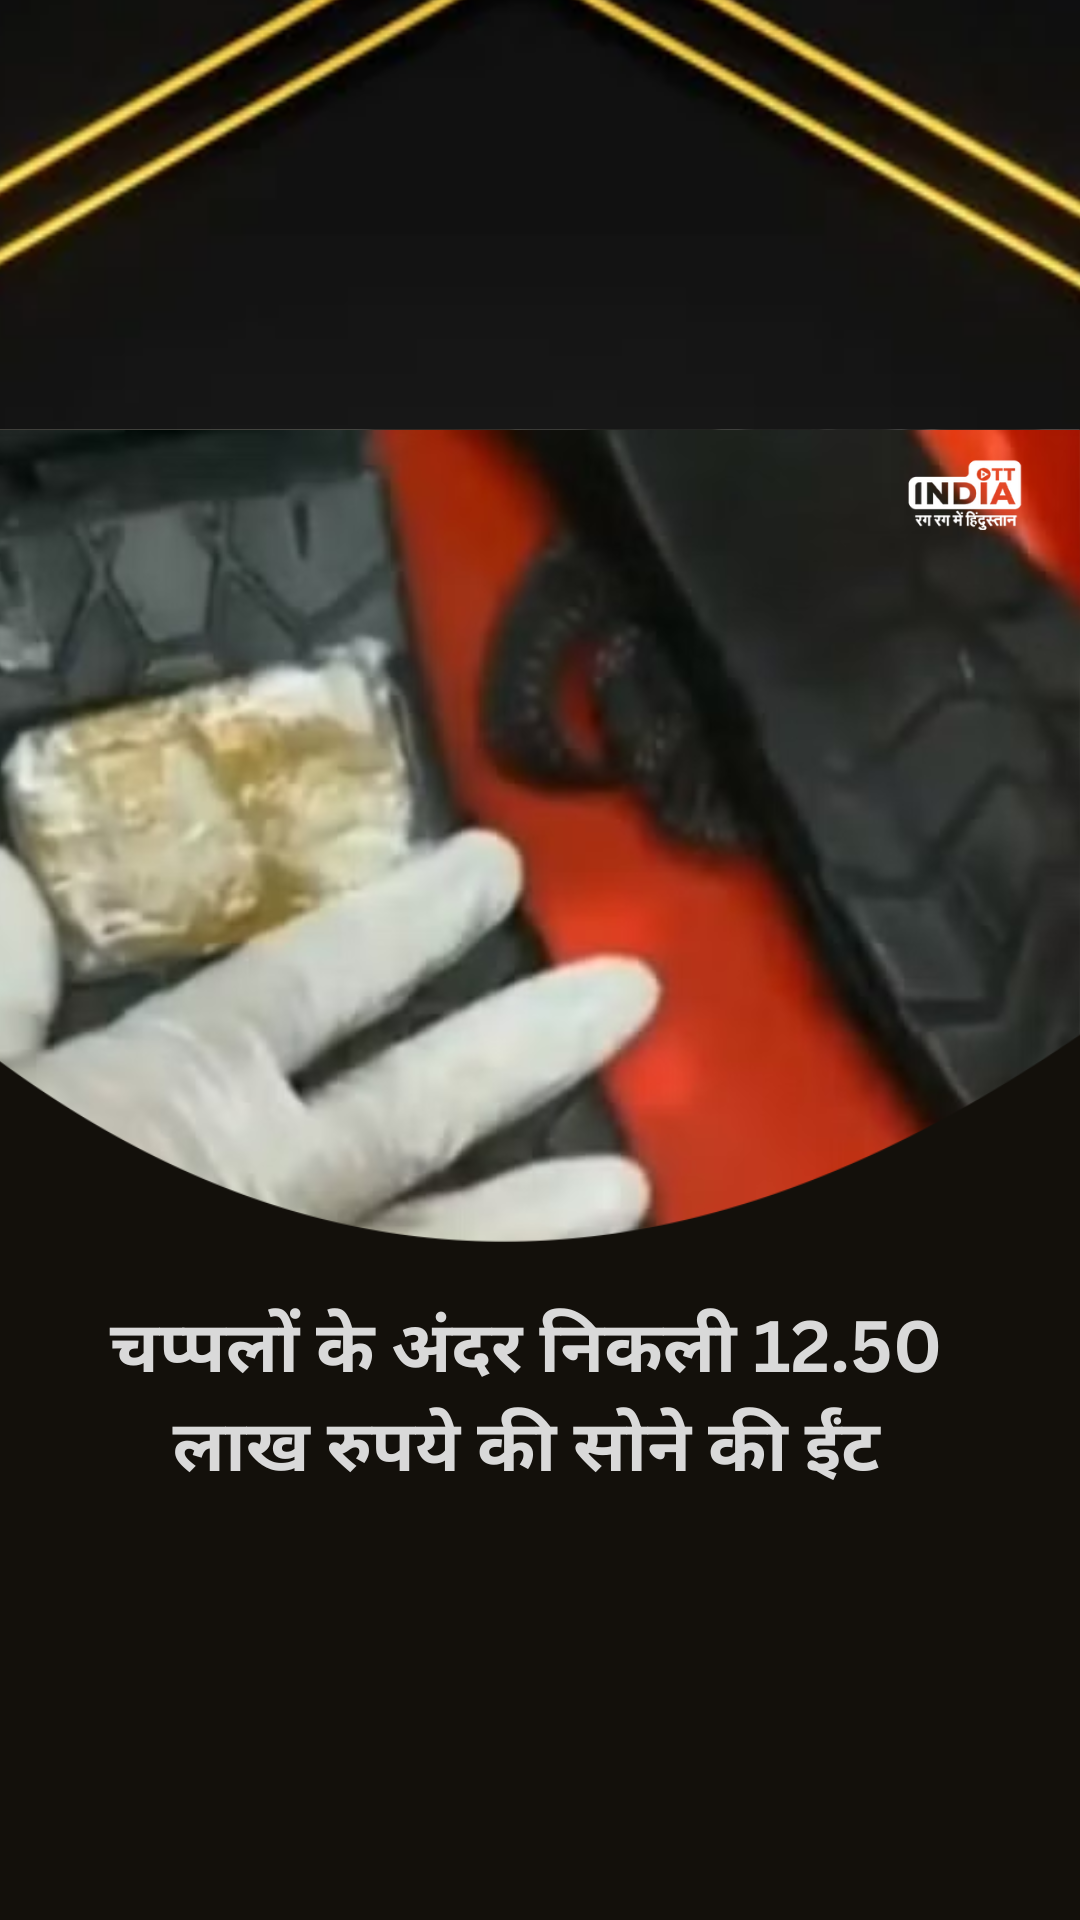 Tamil Nadu Viral Video: Gold brick was hidden inside slippers, worth around Rs 12.50 lakh